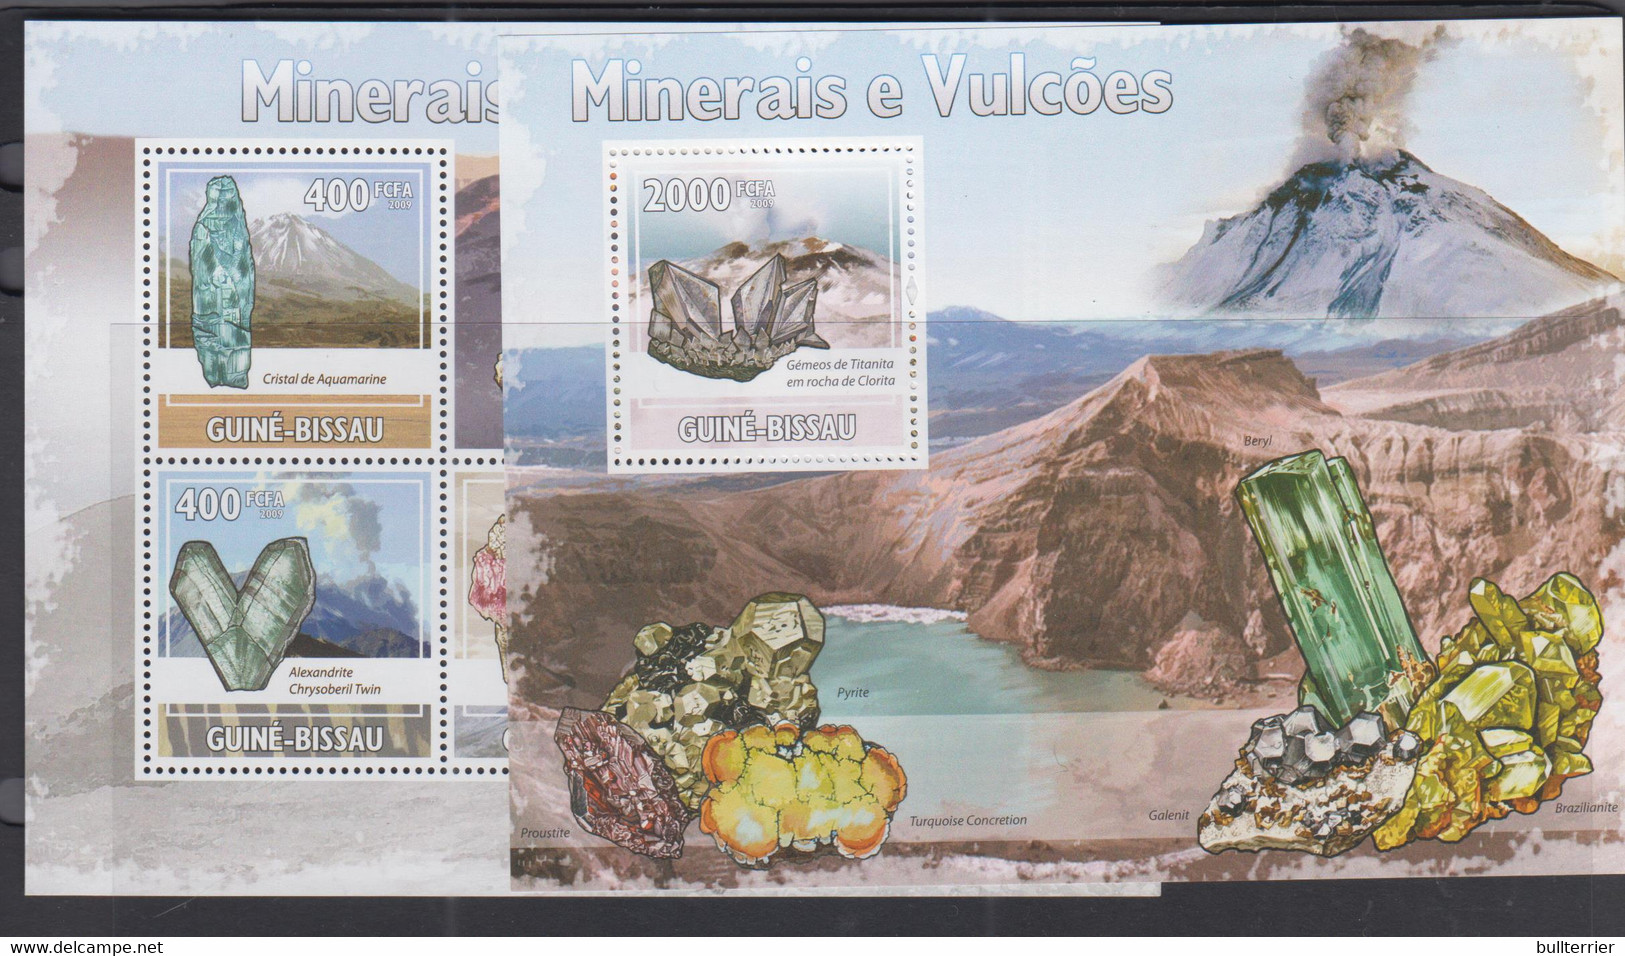 VOLCANOES - GUINEA BISSAU - 2009 - MINERALS & VOLCANOES SHEETLET OF 6 + S/SHEET  MINT NEVER HINGED - Volcanos